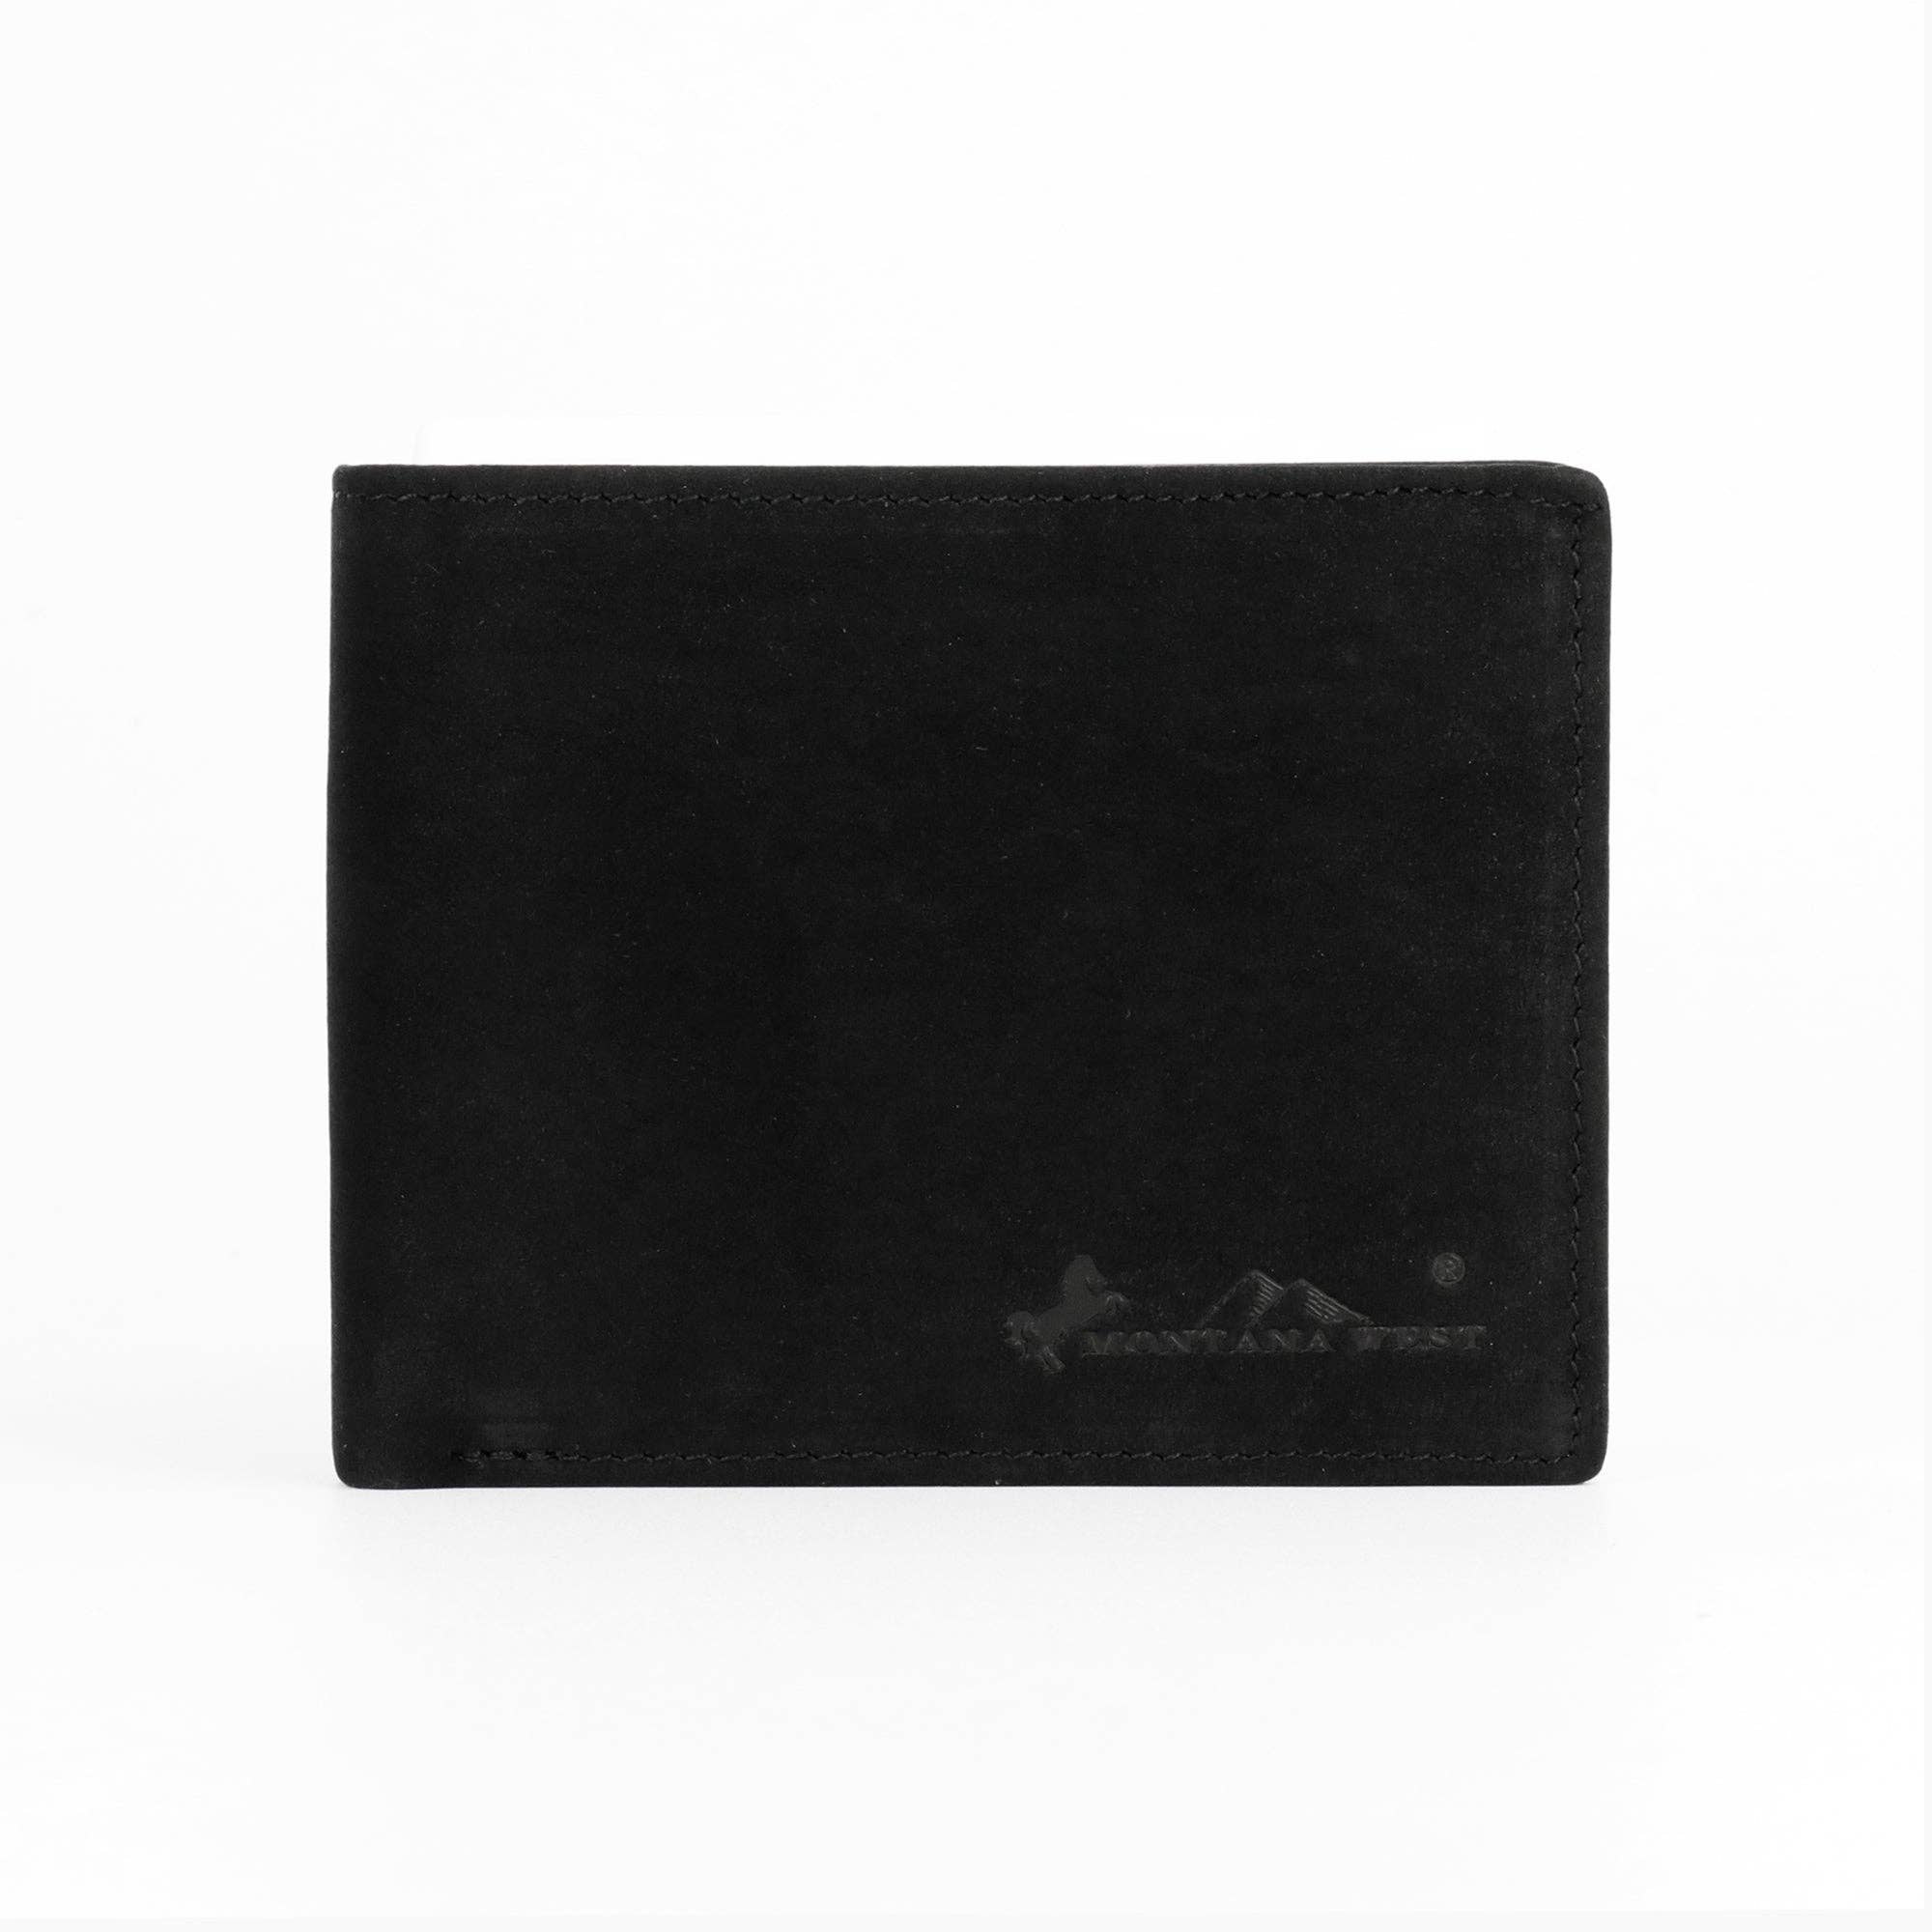 Black RFID Montana West genuine leather men's bi-fold wallet